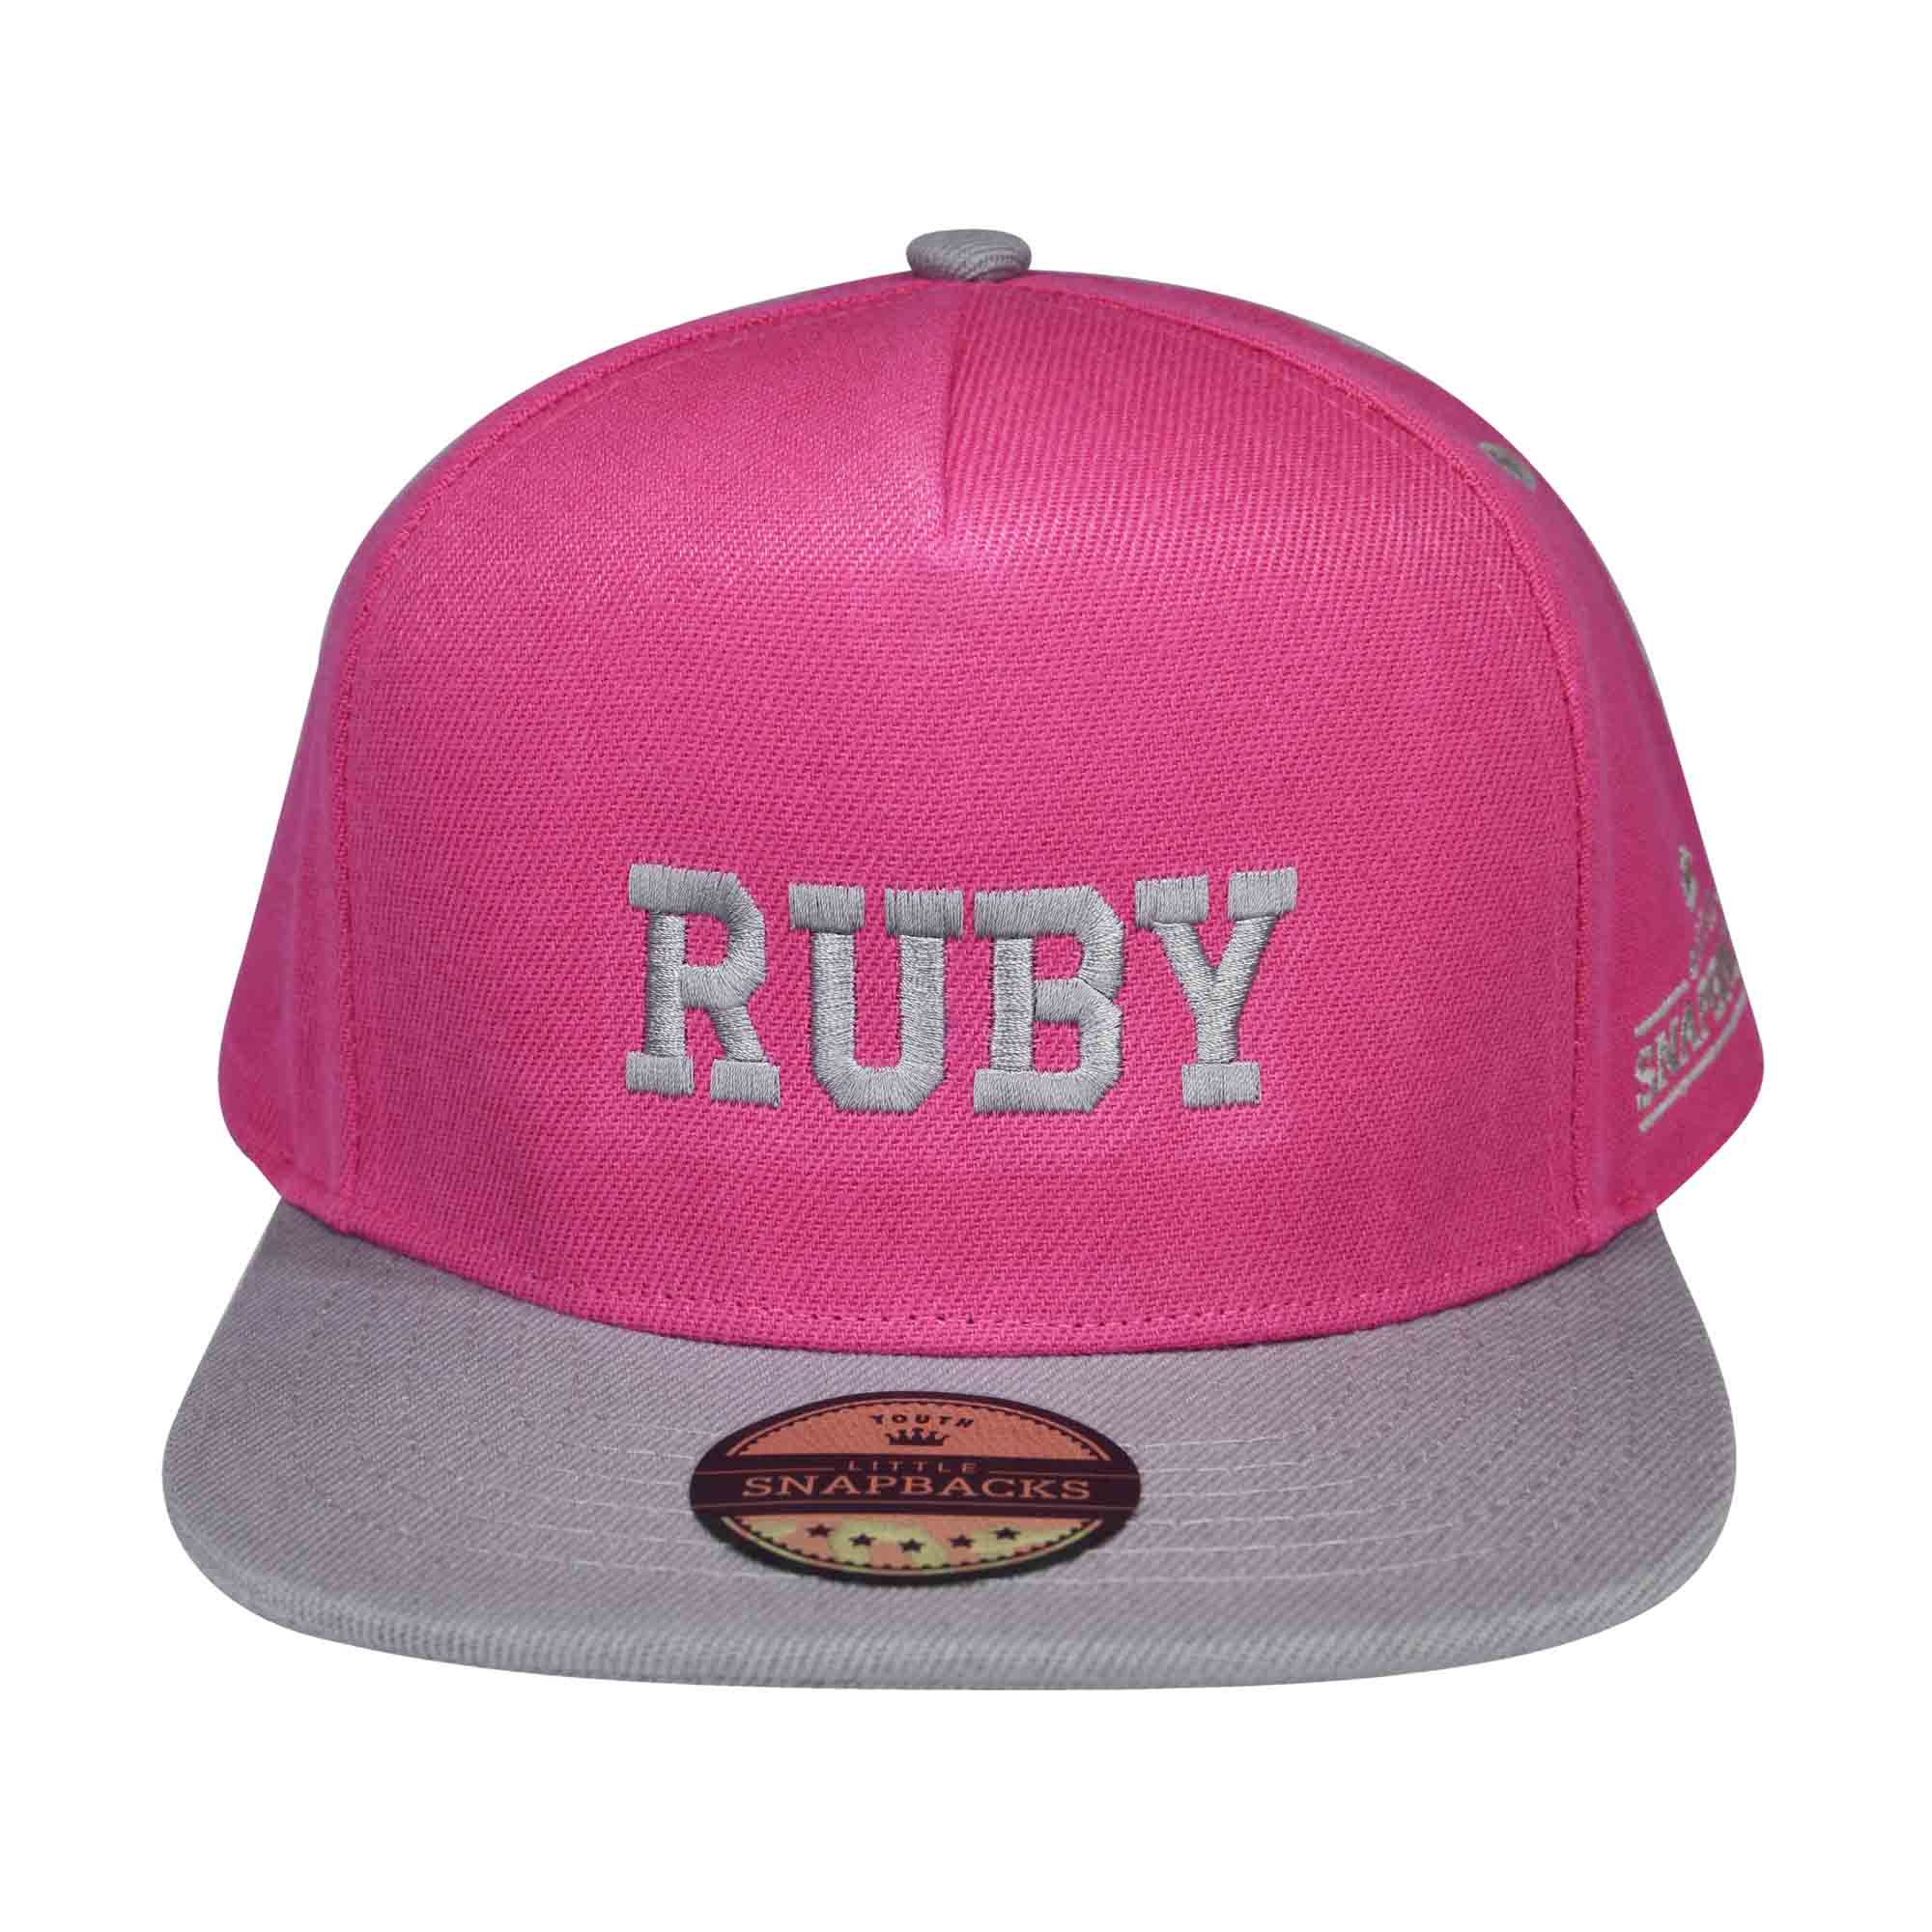 Personalised Kids Hats - Hot Pink & Grey Snapback